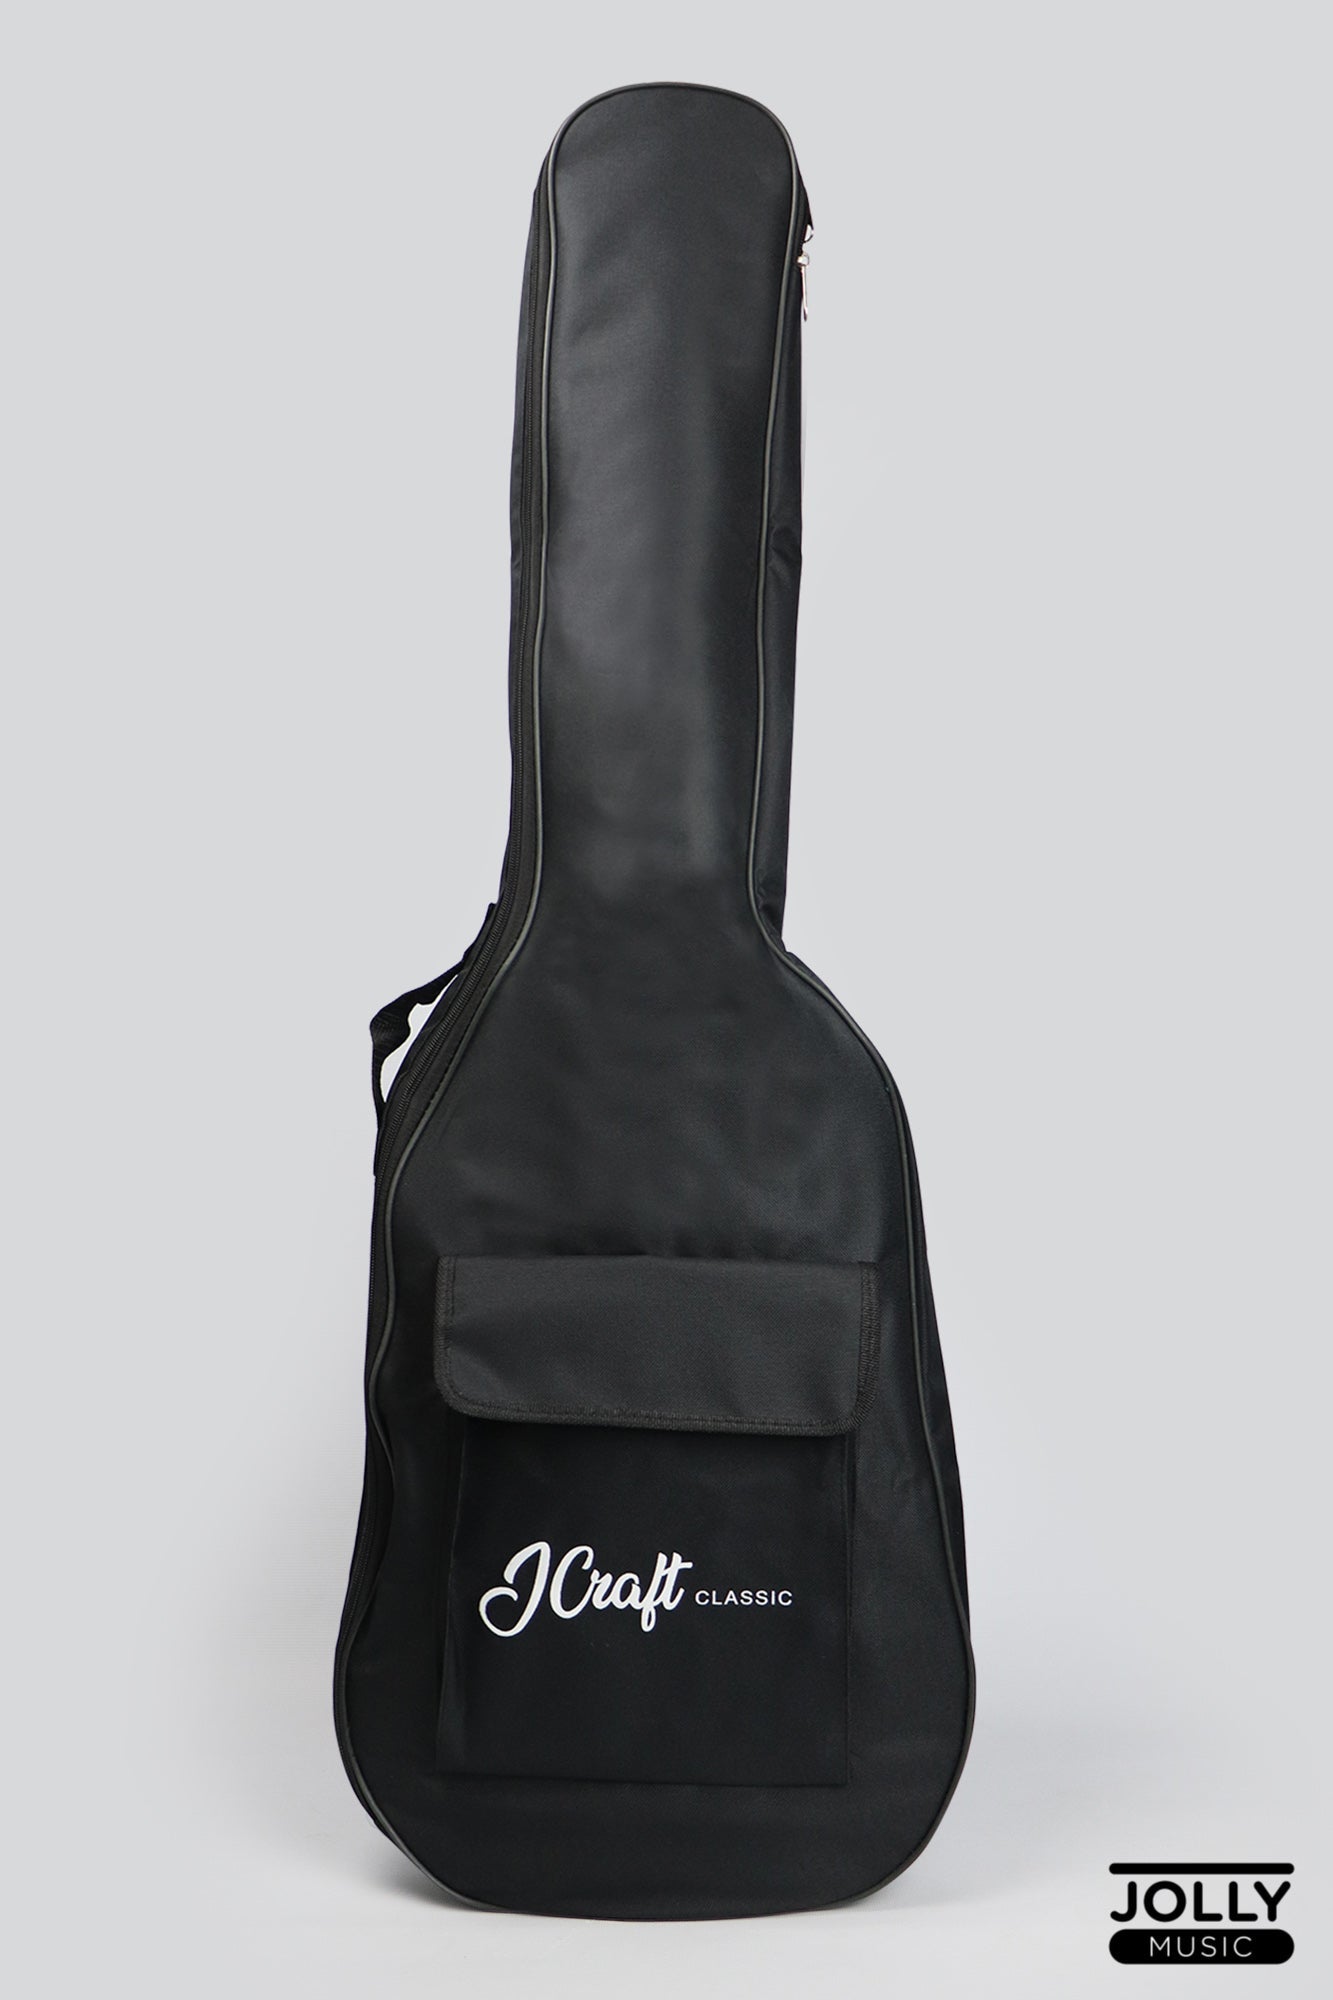 JCraft PB-1 5-String Electric Bass Guitar with Gigbag - Double Black